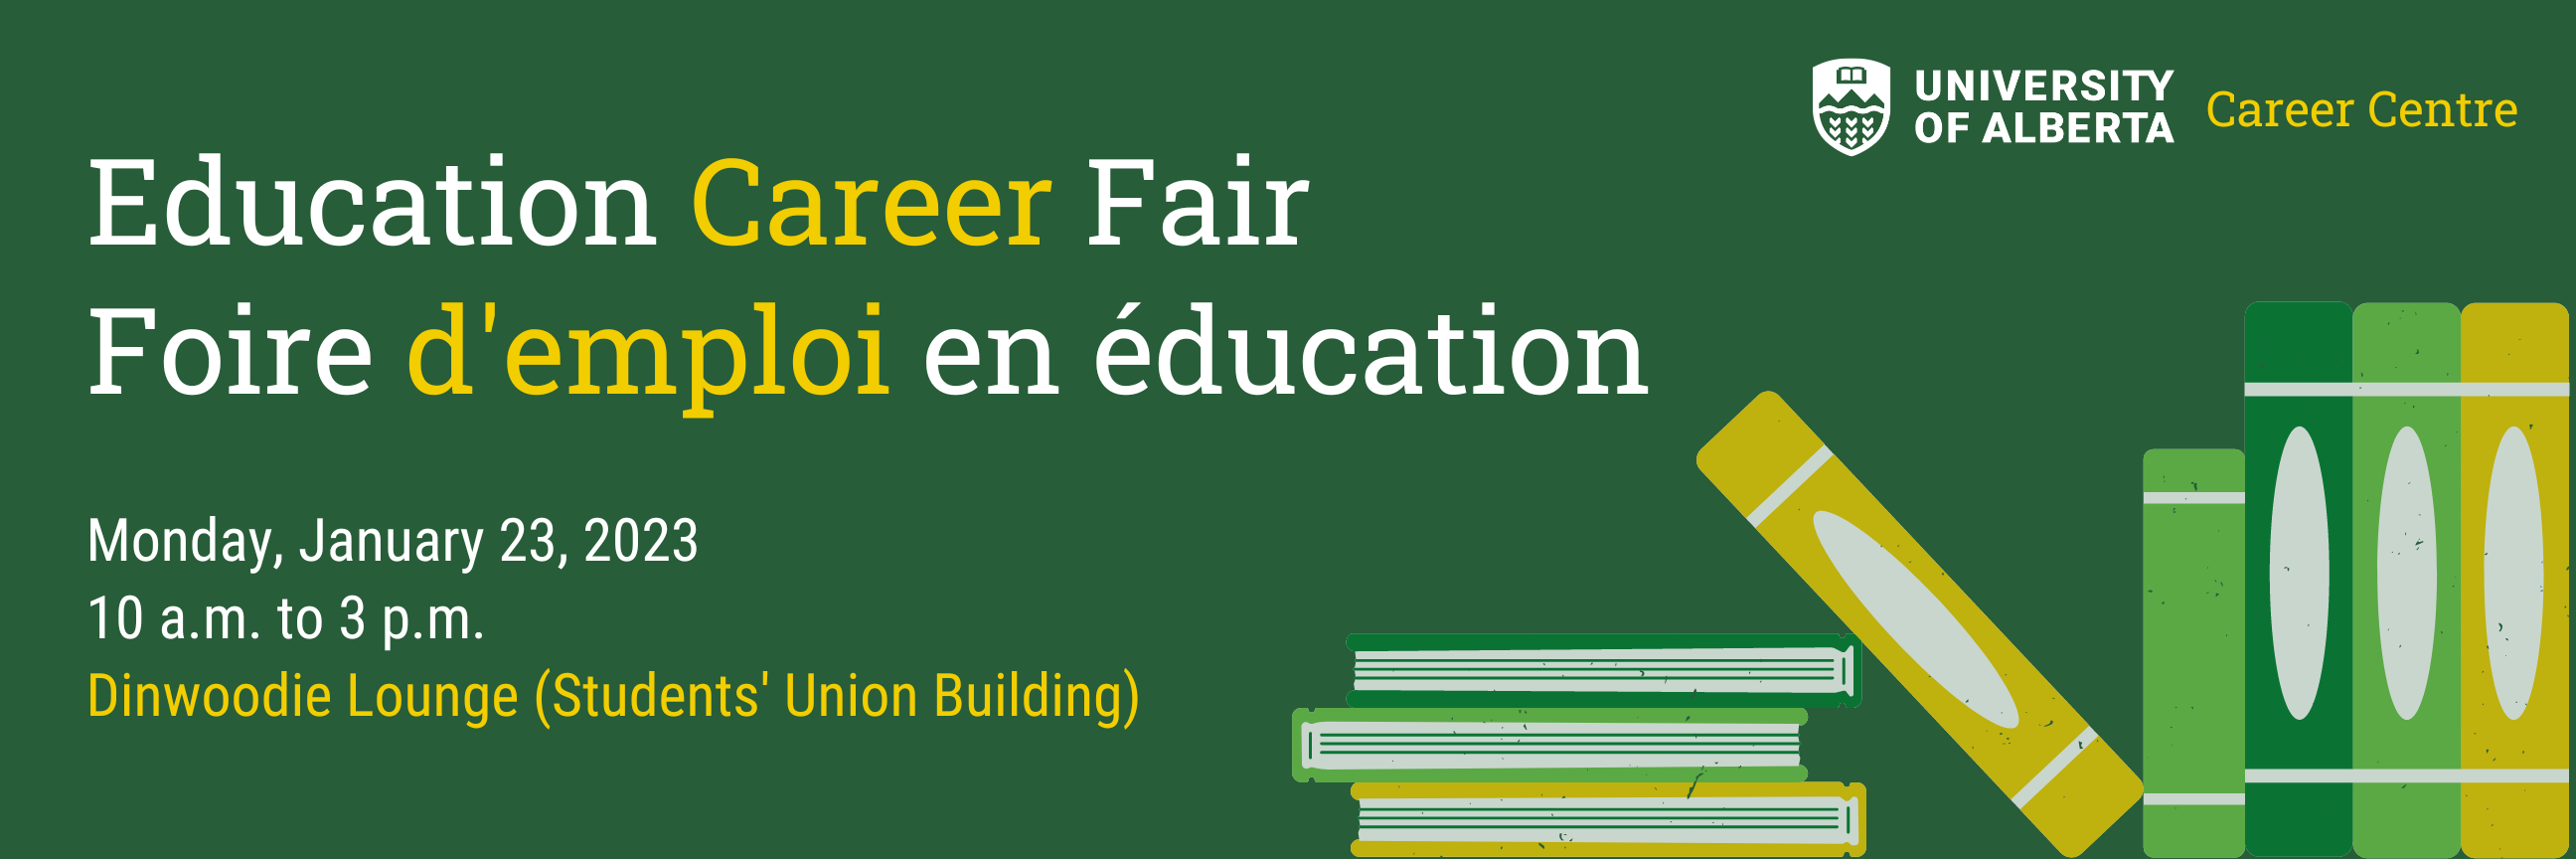 education-career-fair-web-banner2.png